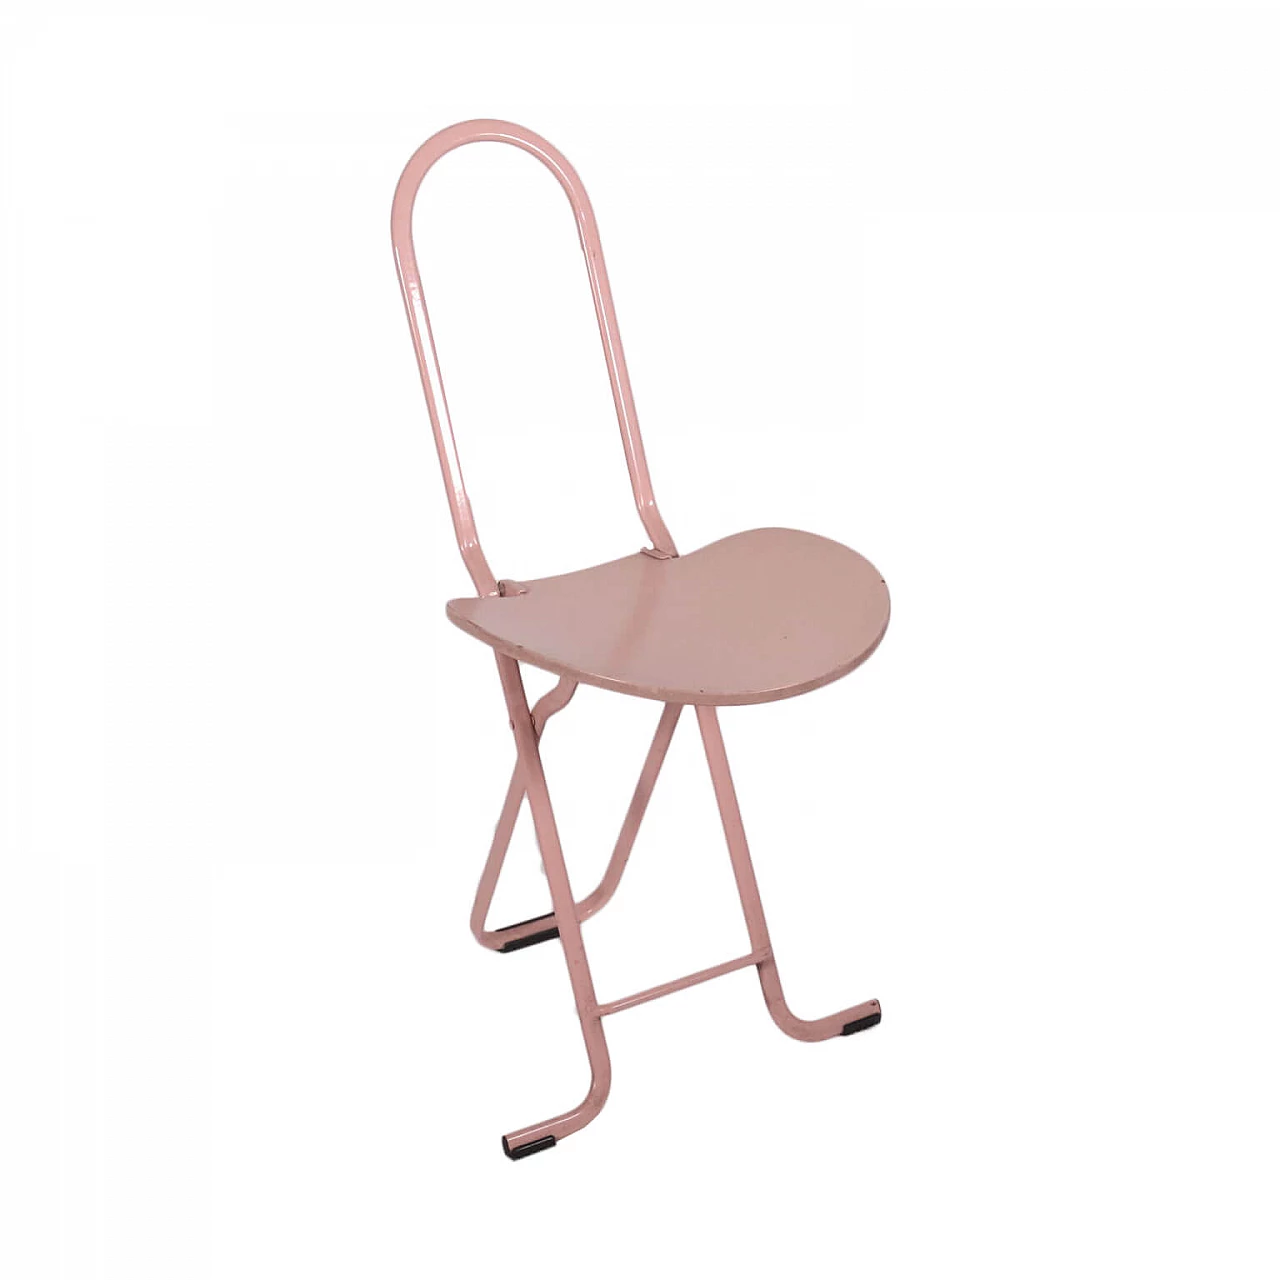 Dafne chair by Gastone Rinaldi for Thema, 80s 1215910